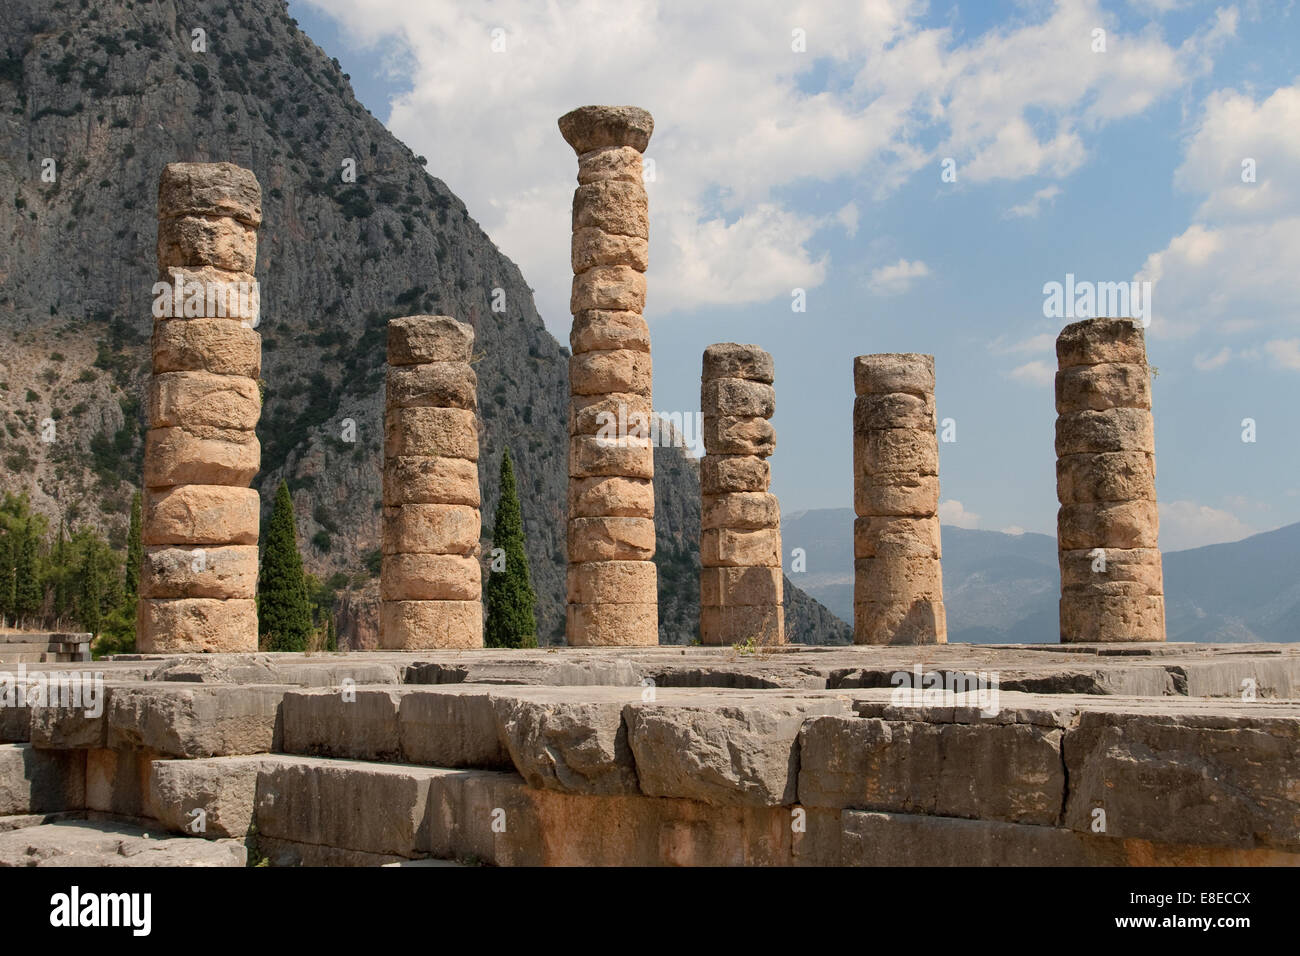 Five standing columns of Temple of Apollo in Delphi, Greece. Stock Photo